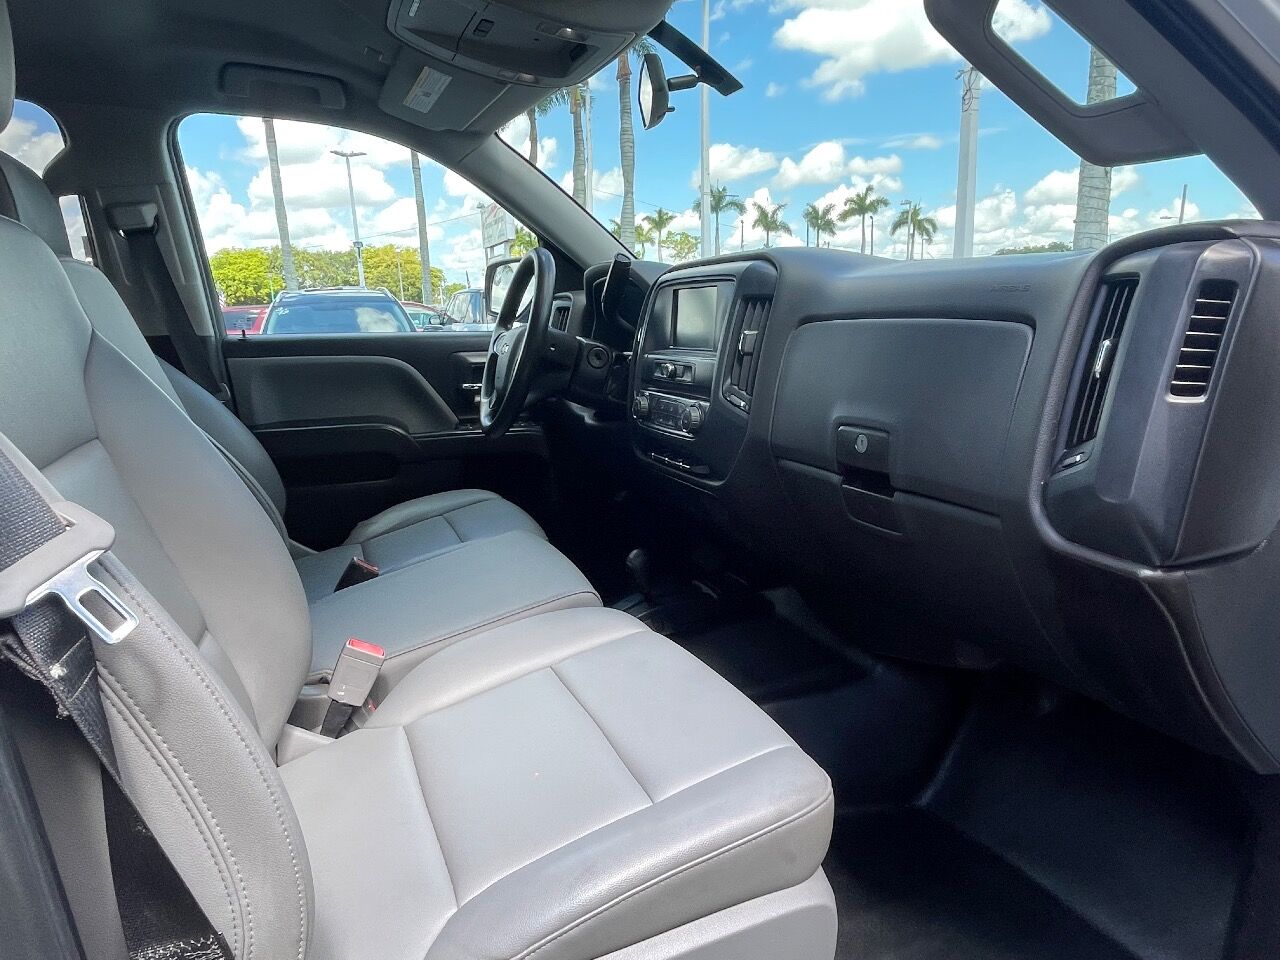 2018 Chevrolet Silverado Pickup - $24,900